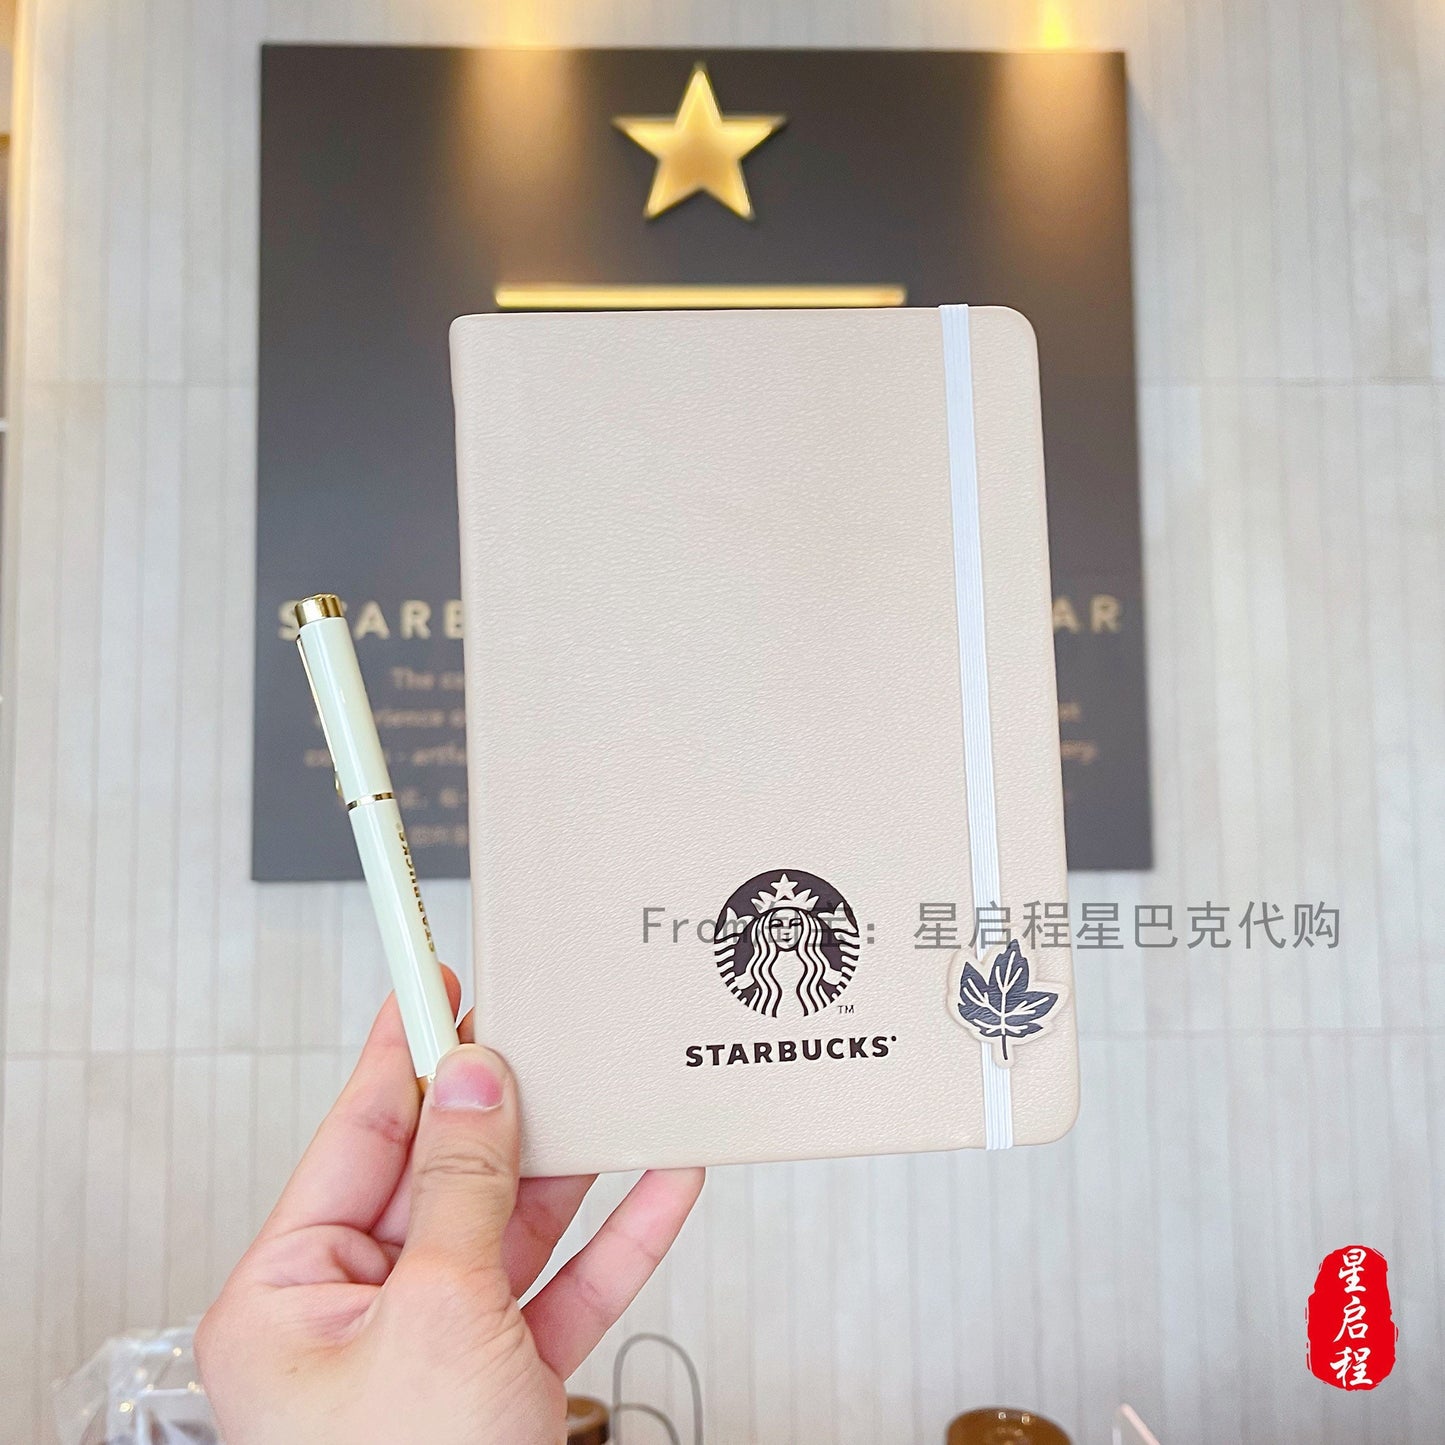 Starbucks China 2021 autumn theme table decoration with notebook & pen set